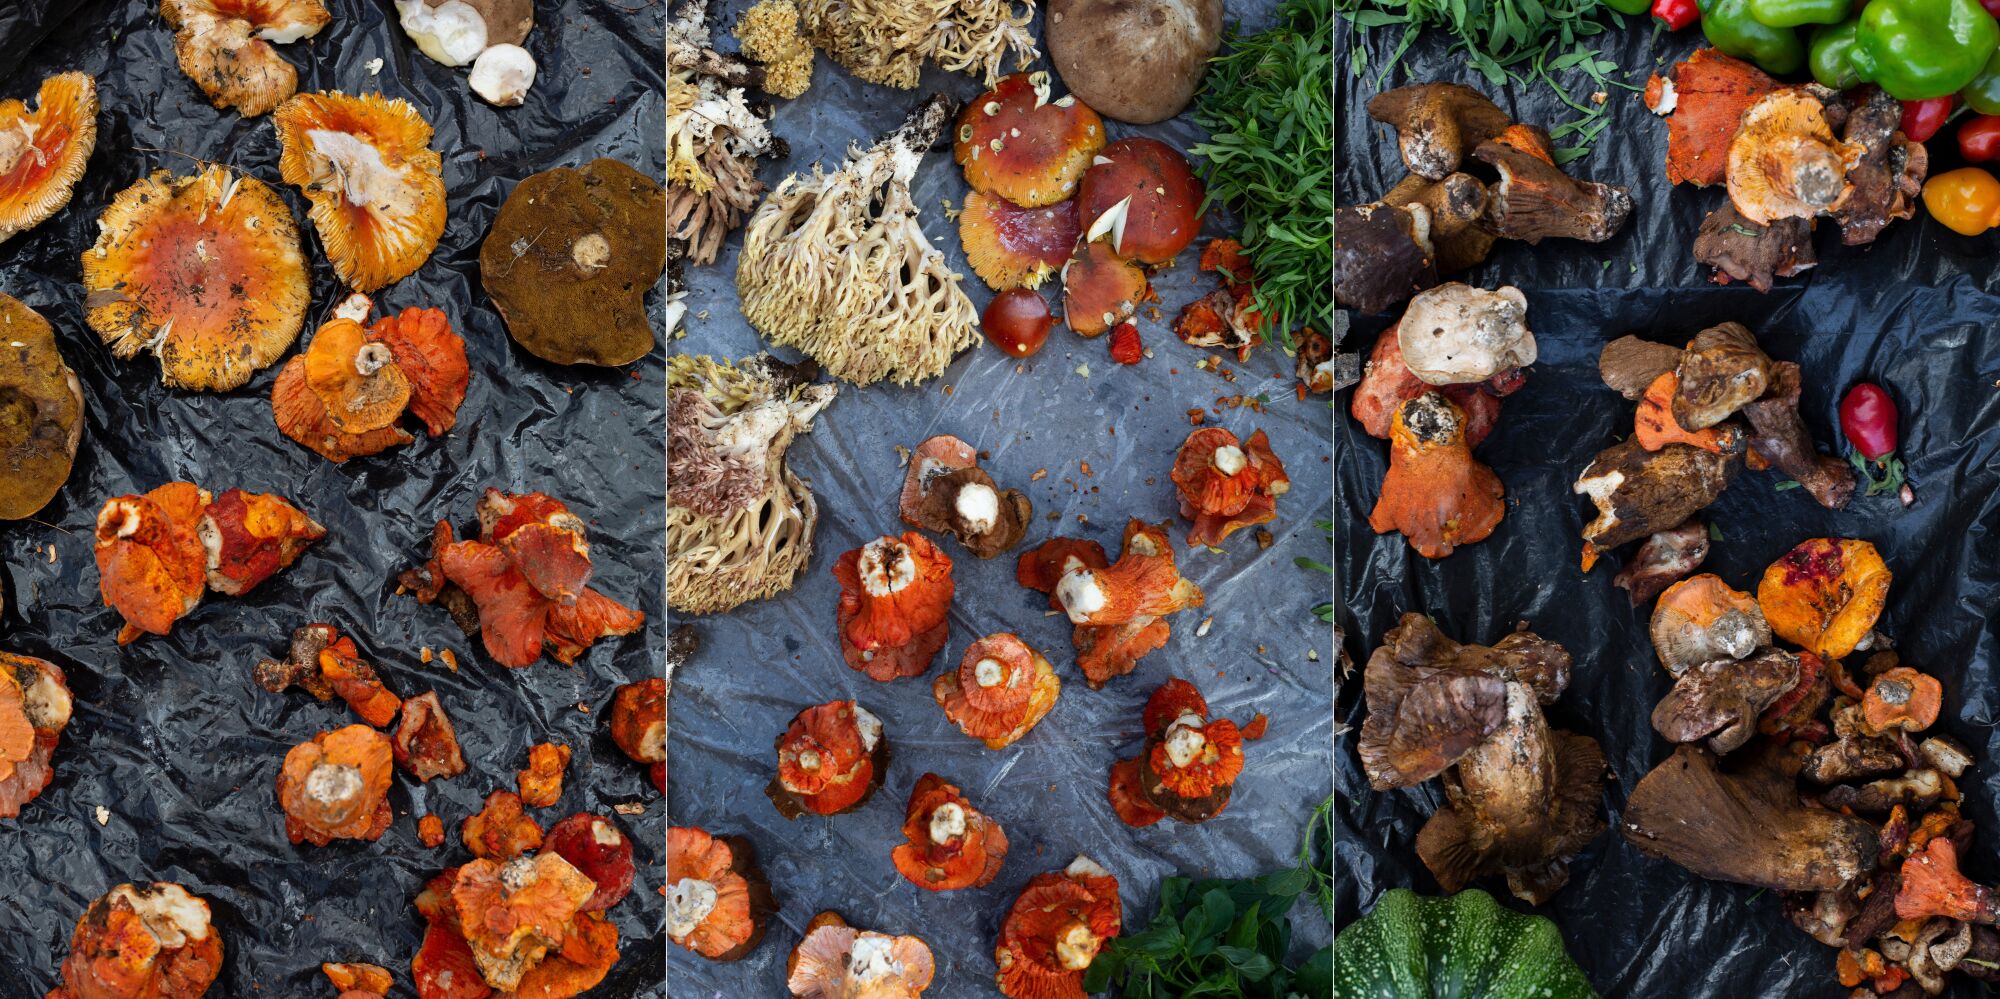 A variety of wild mushrooms